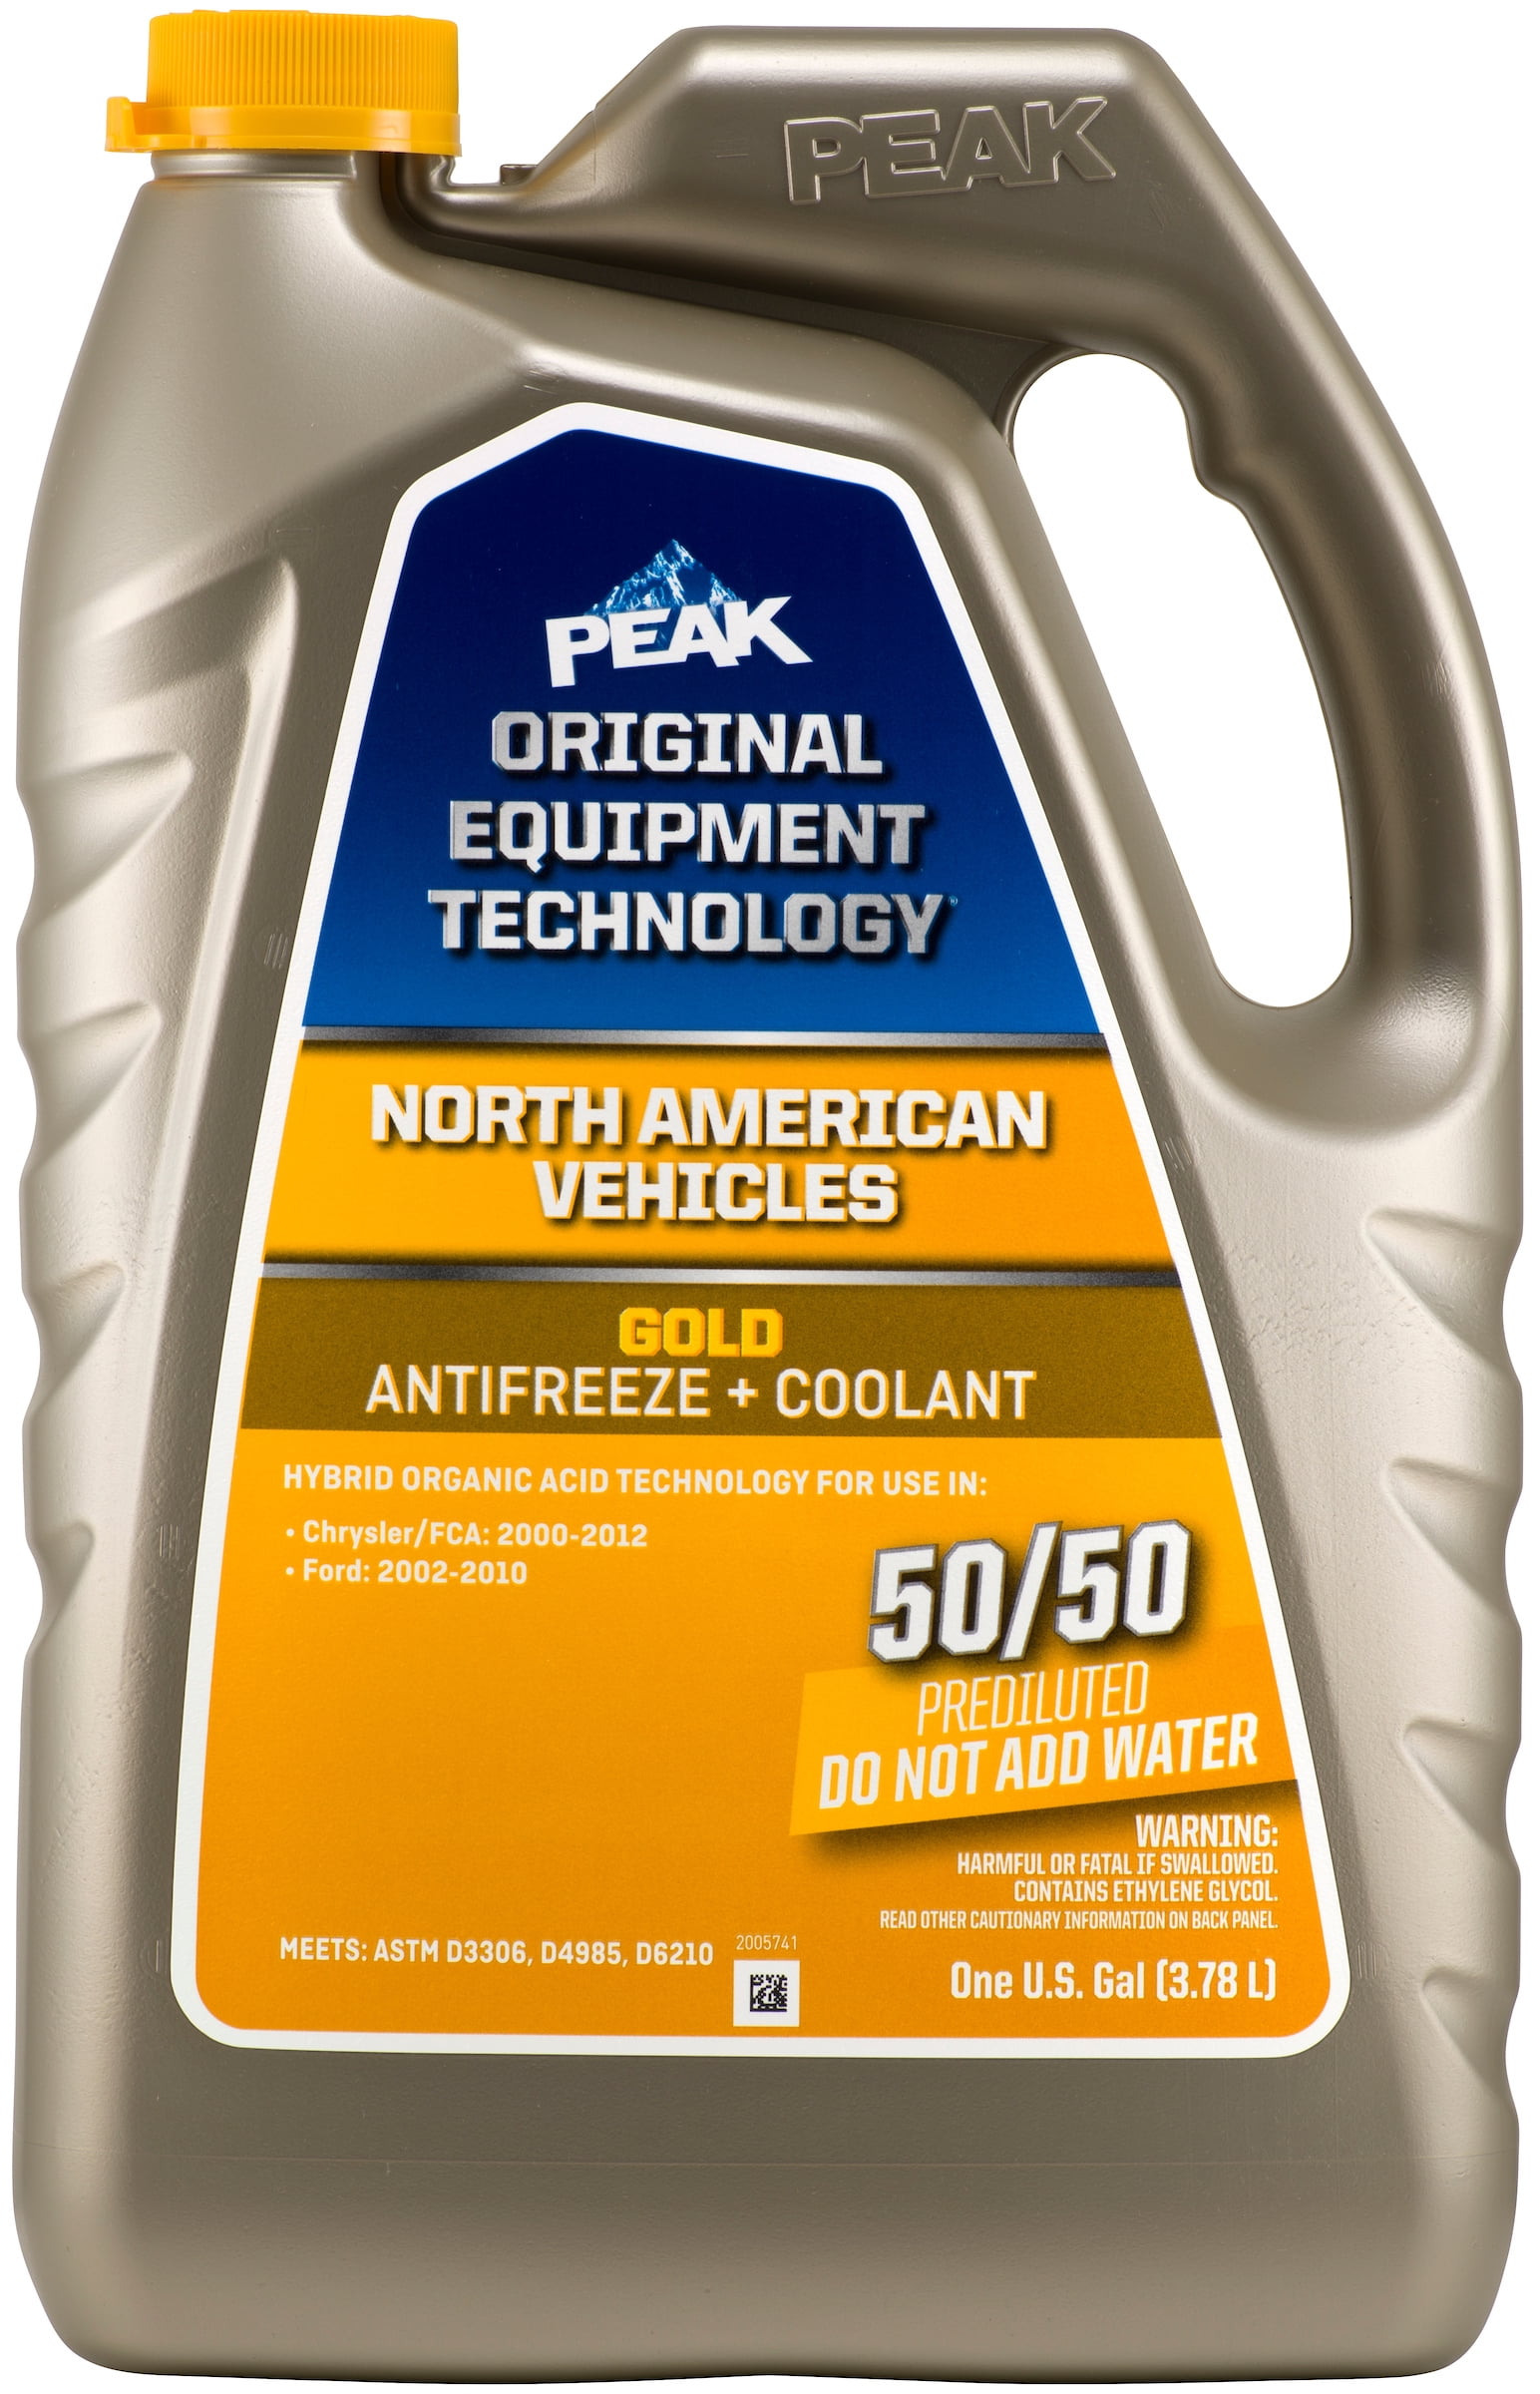 buy-peak-original-equipment-technology-antifreeze-coolant-for-north